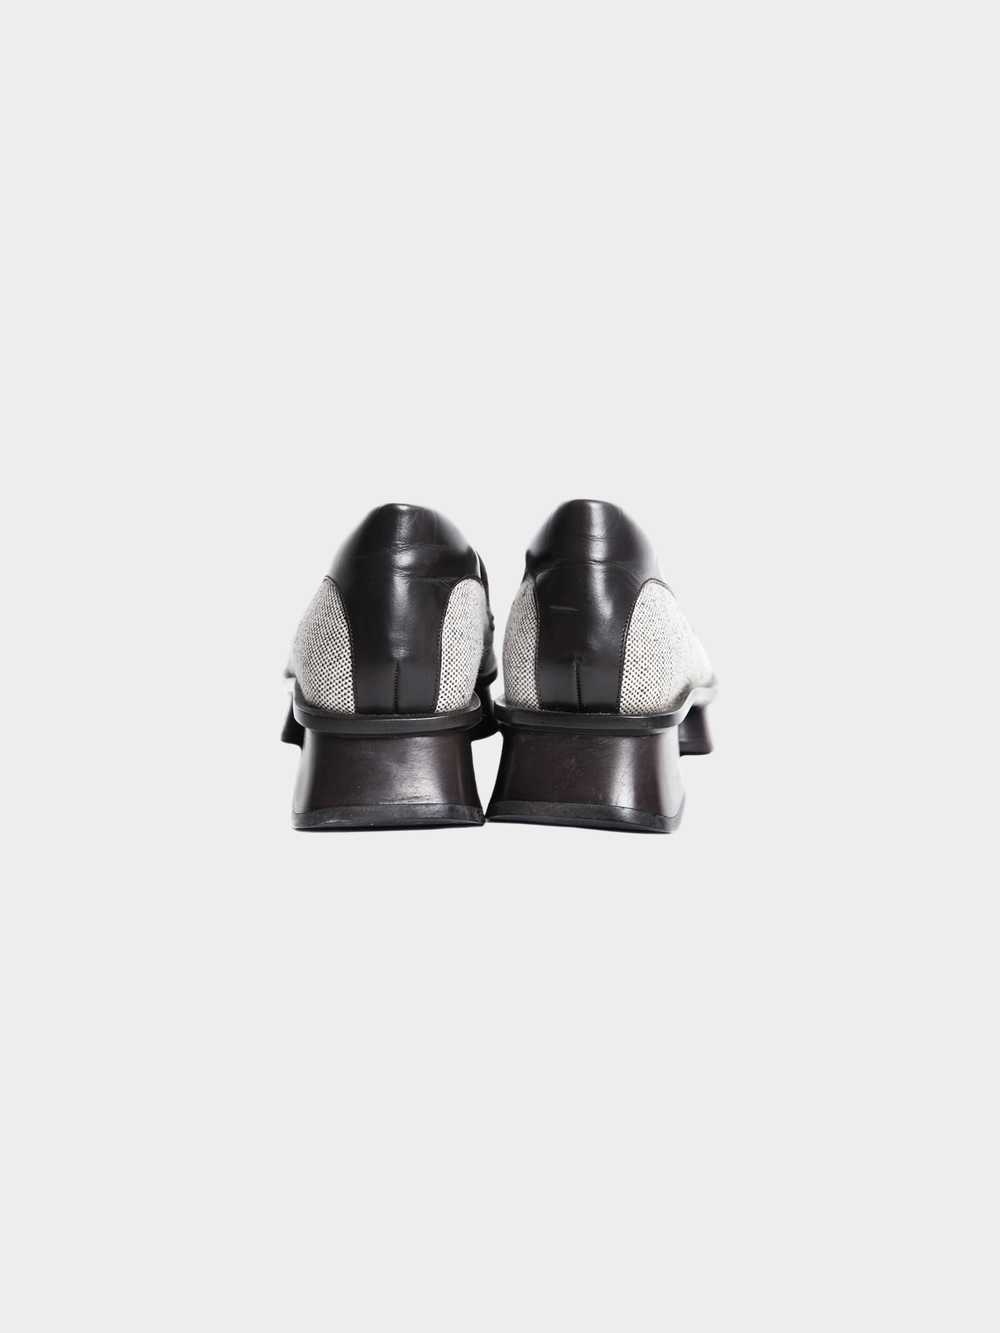 Prada SS 1999 Black and Grey Platform Loafers - image 4